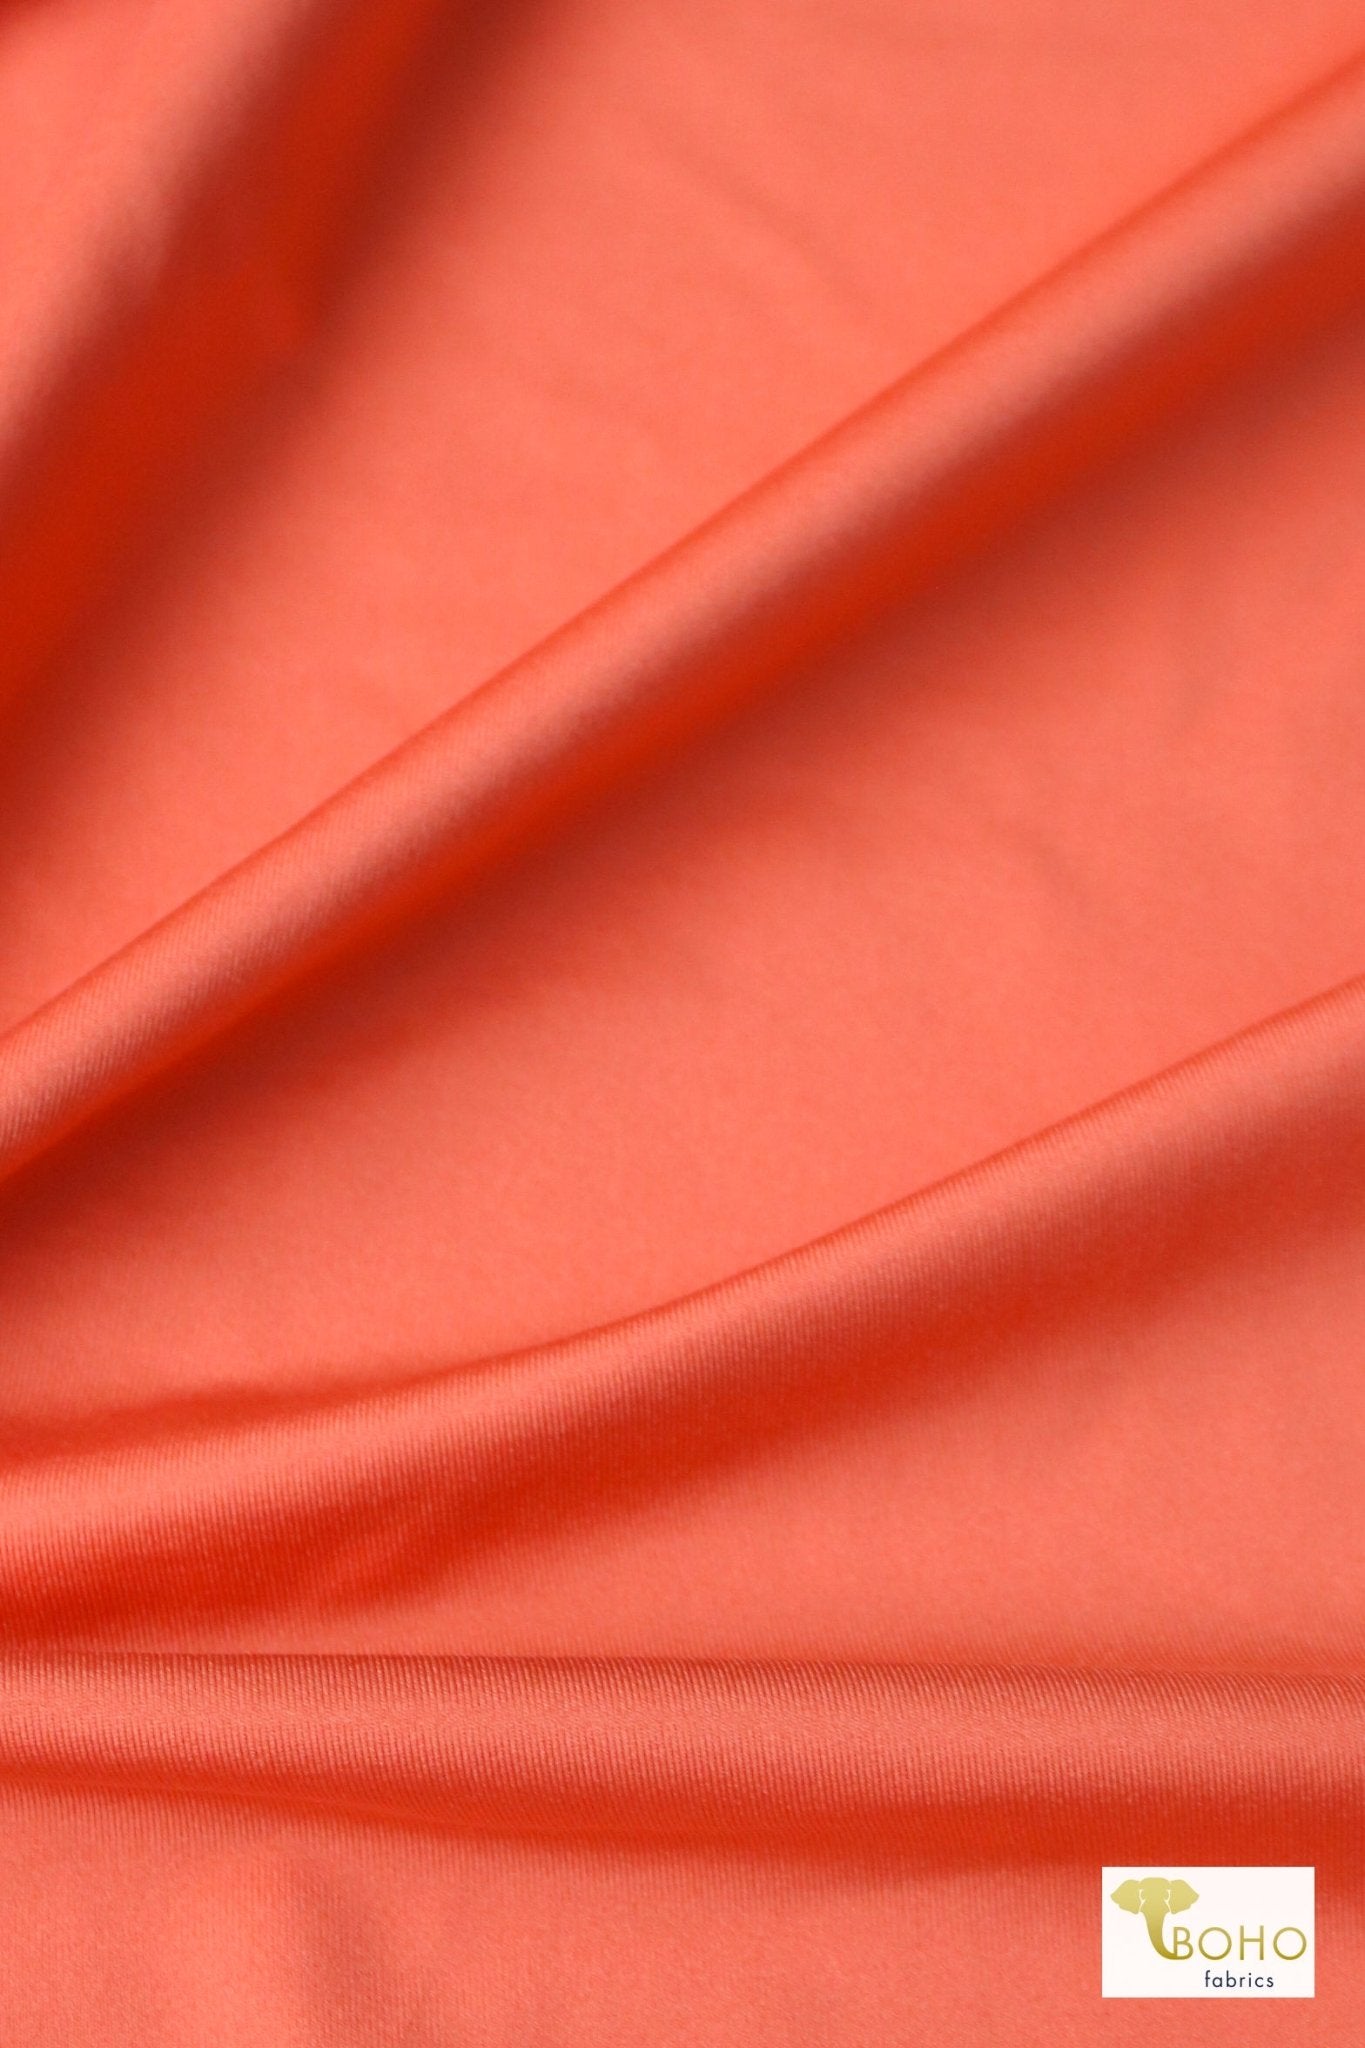 Nylon Spandex in Papaya. Use for Activewear and Yoga! ATH-104 - Boho Fabrics